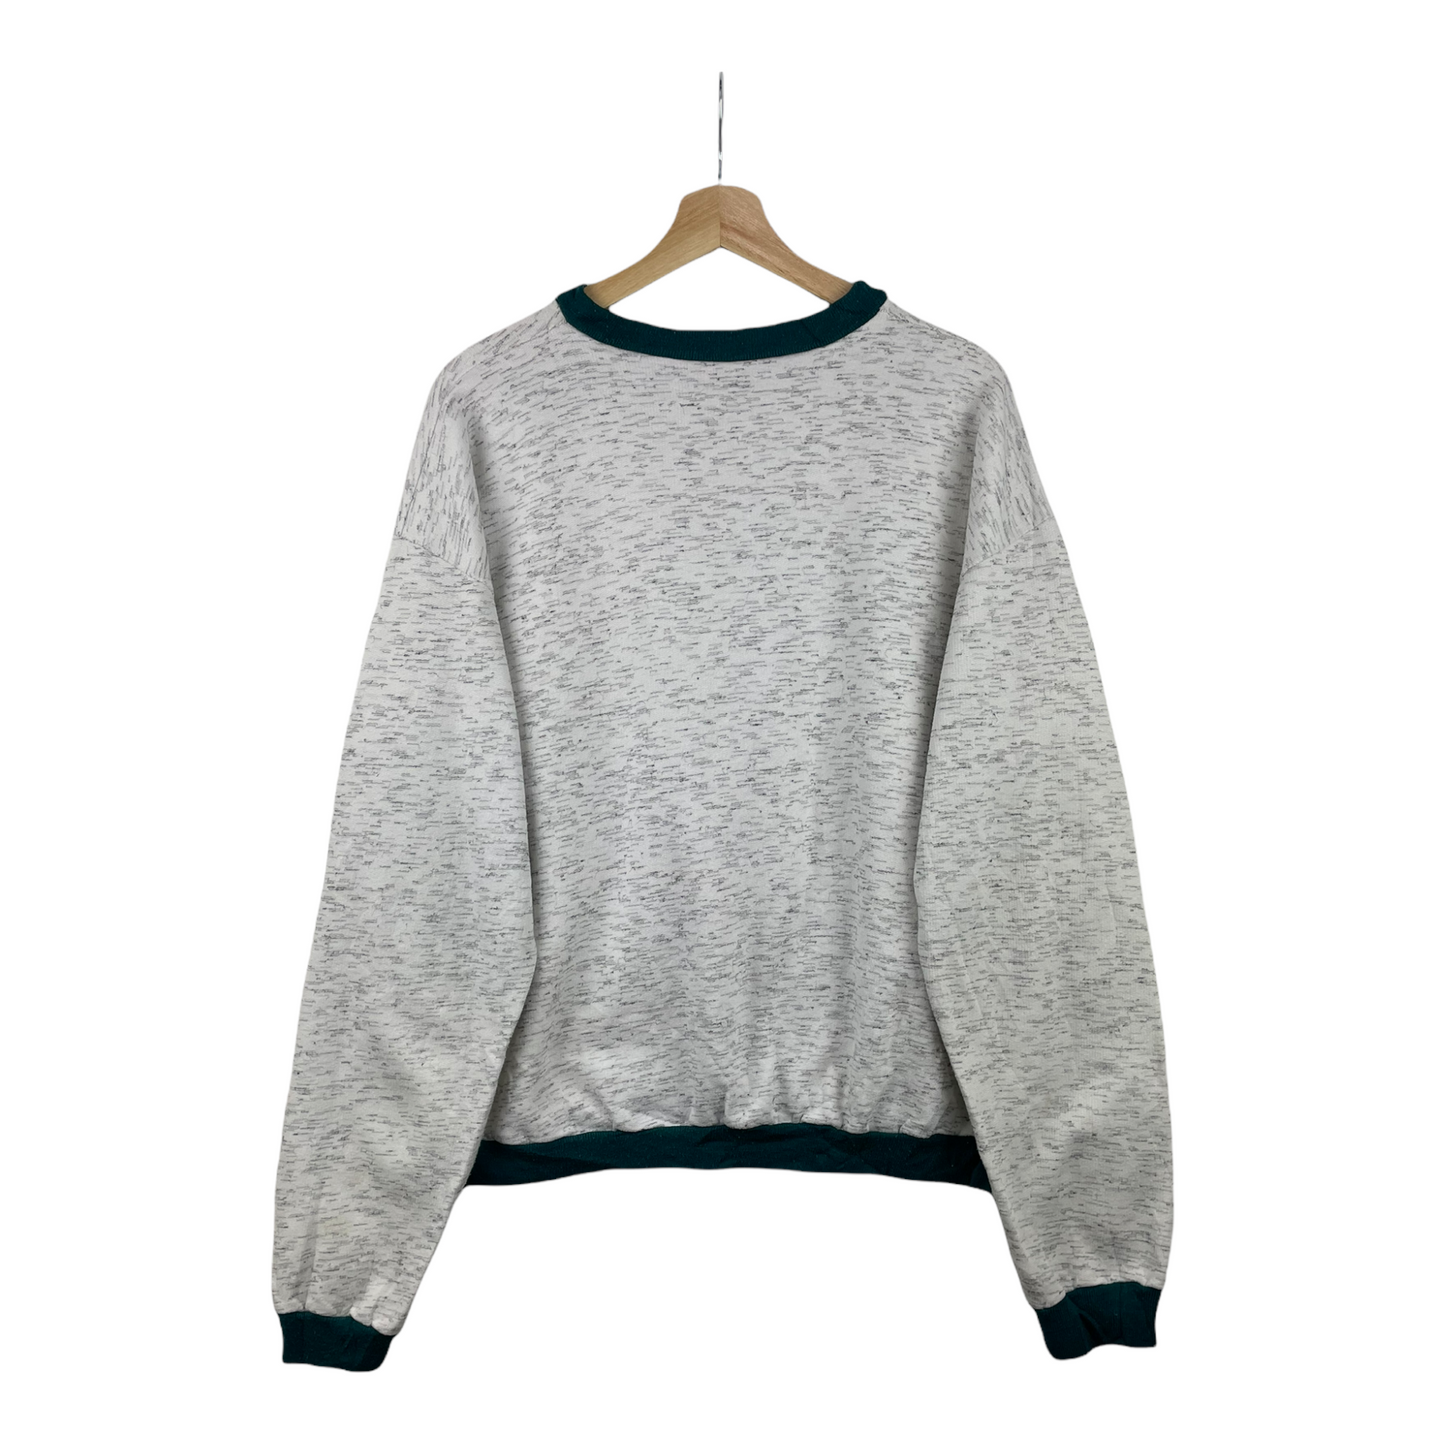 90s Unbranded Sweatshirt Grey Green M